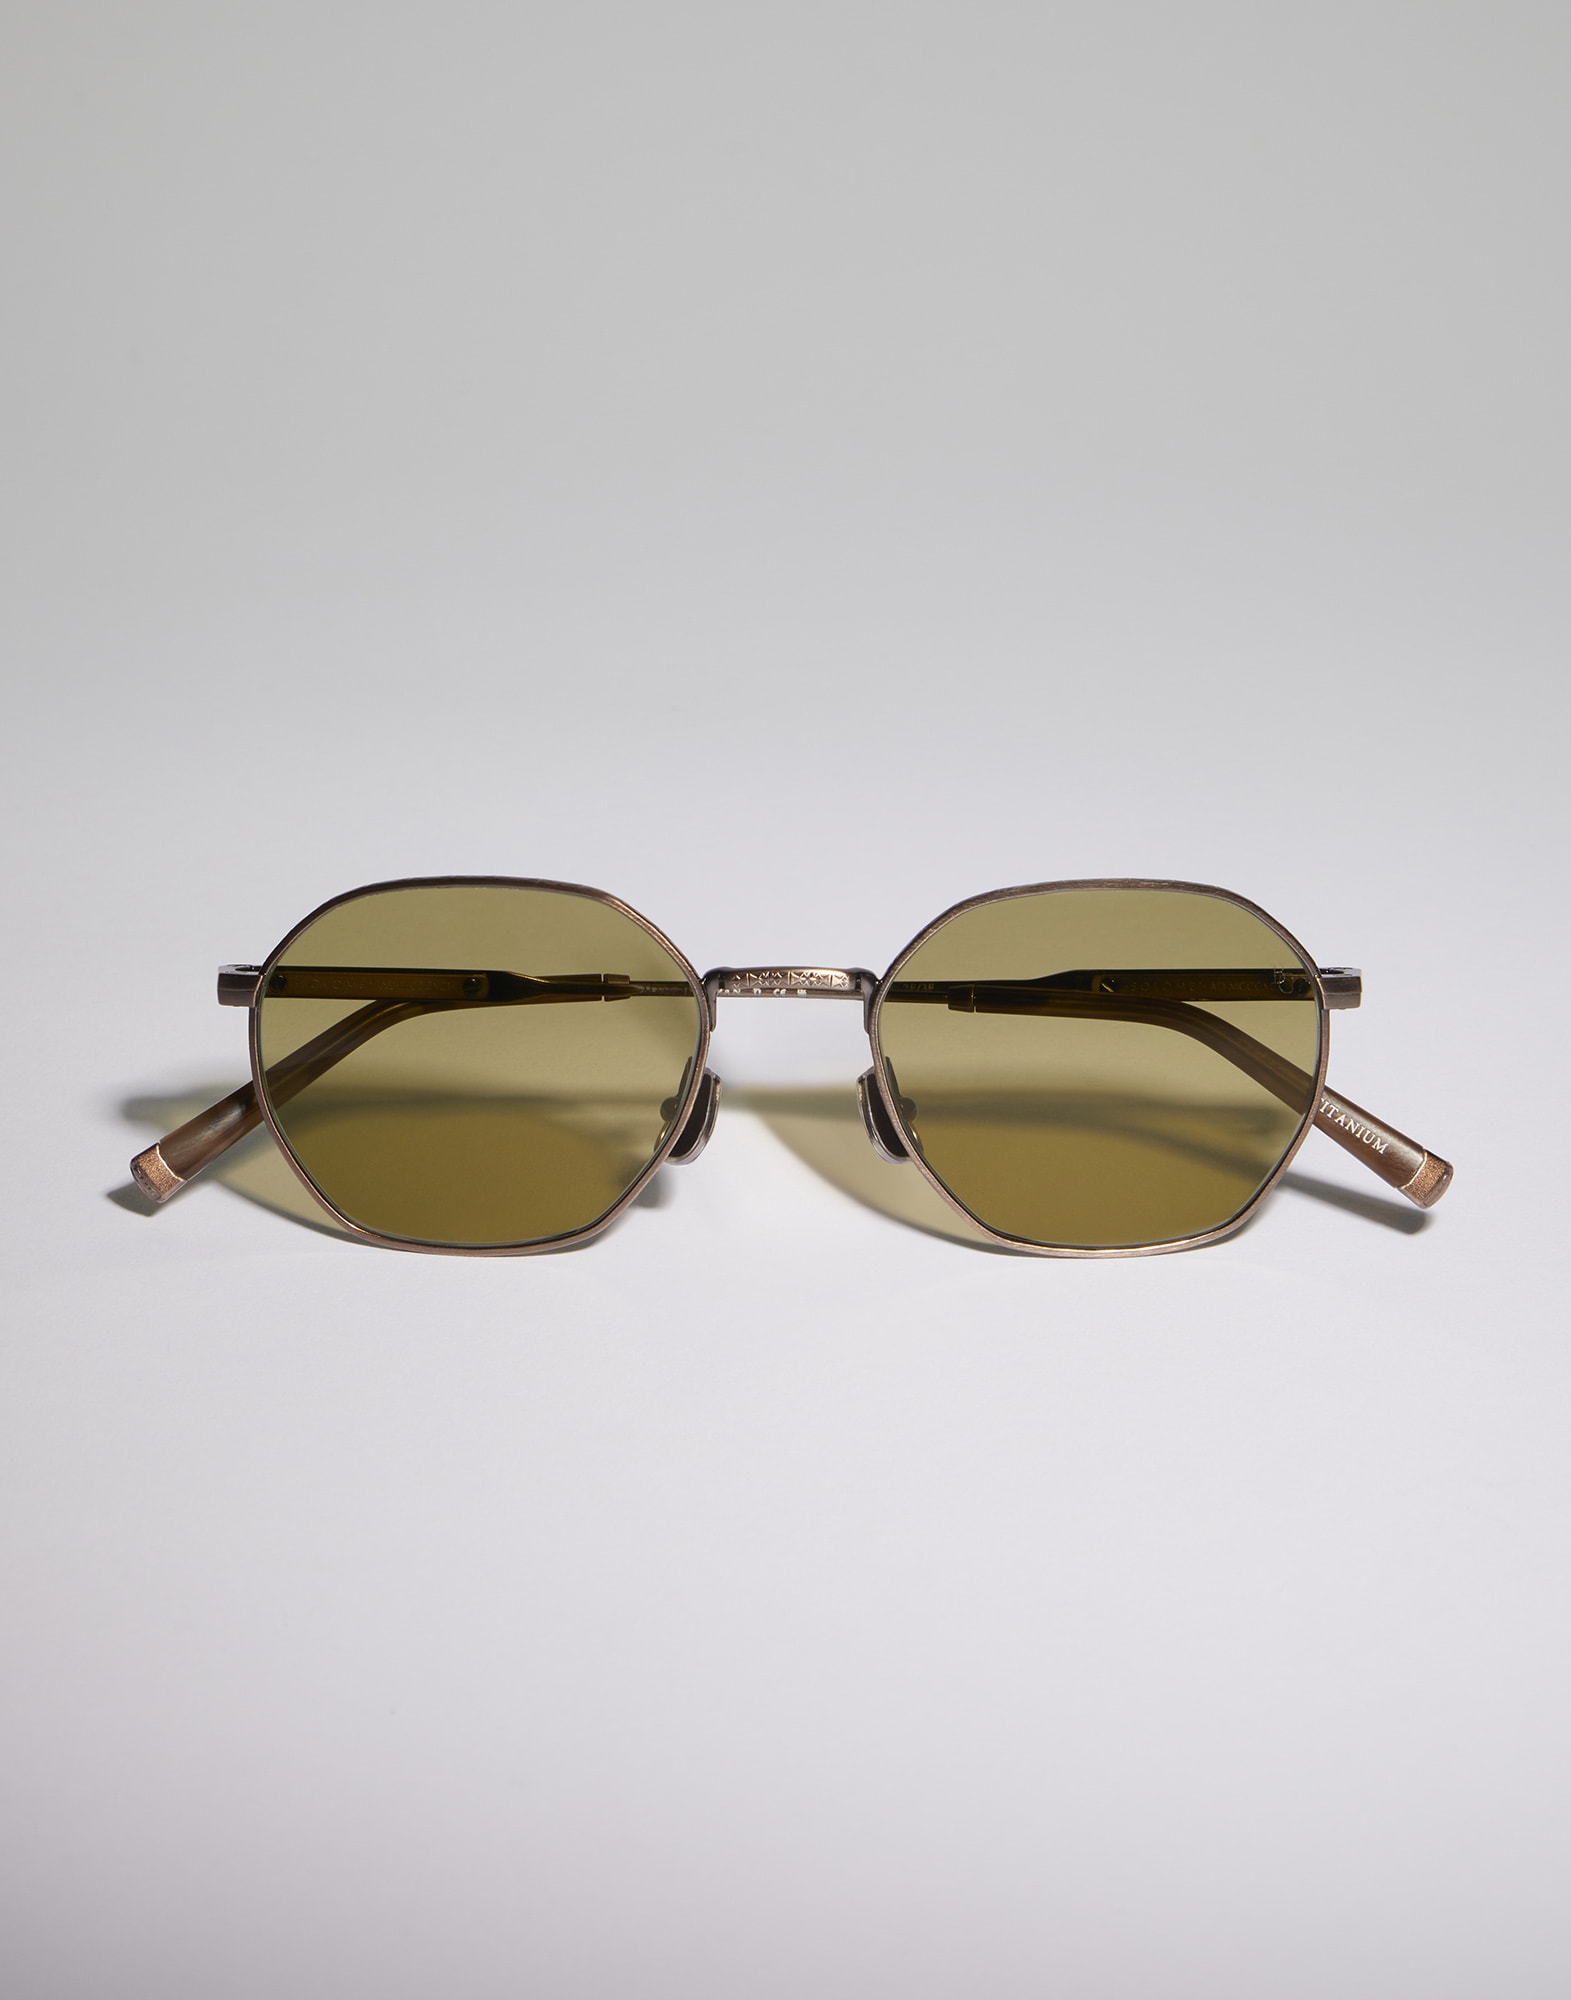 Sunglasses with photochromic lenses